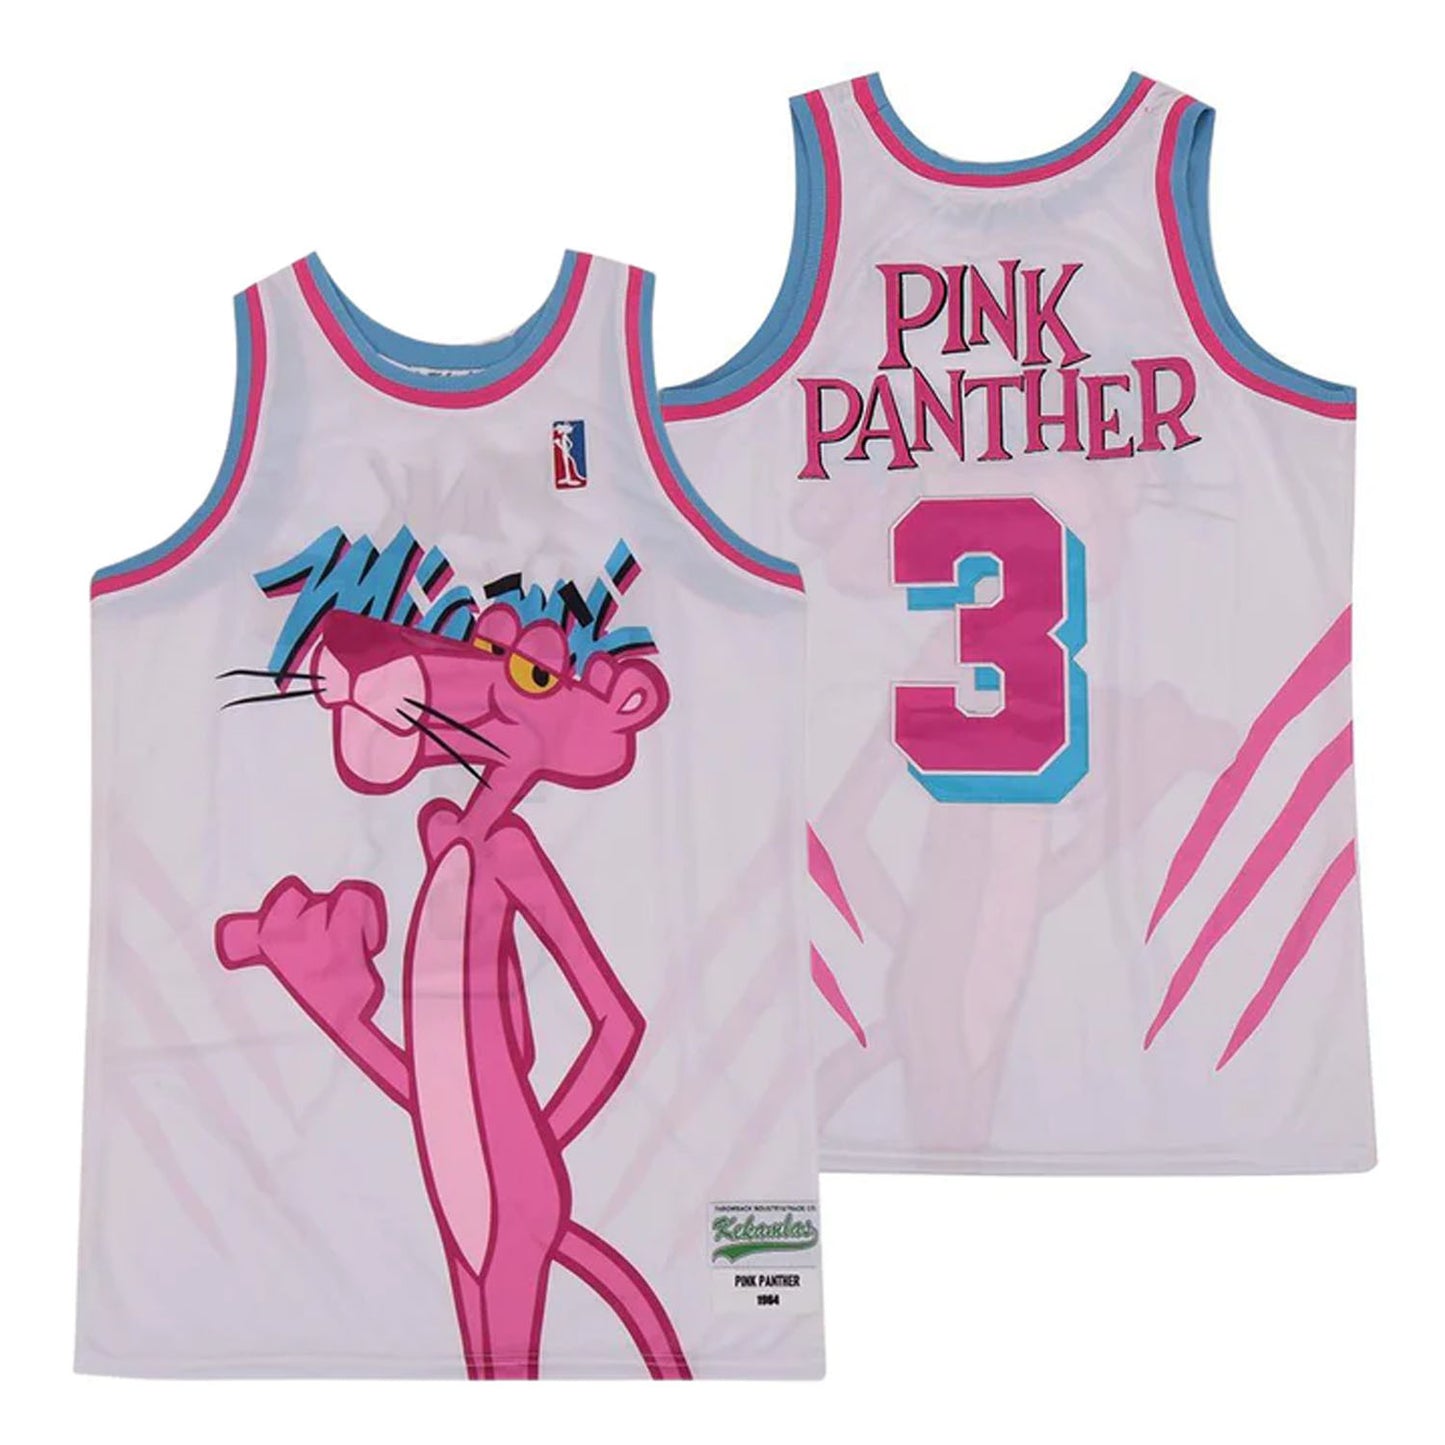 Miami X Pink Panther #3 Jersey